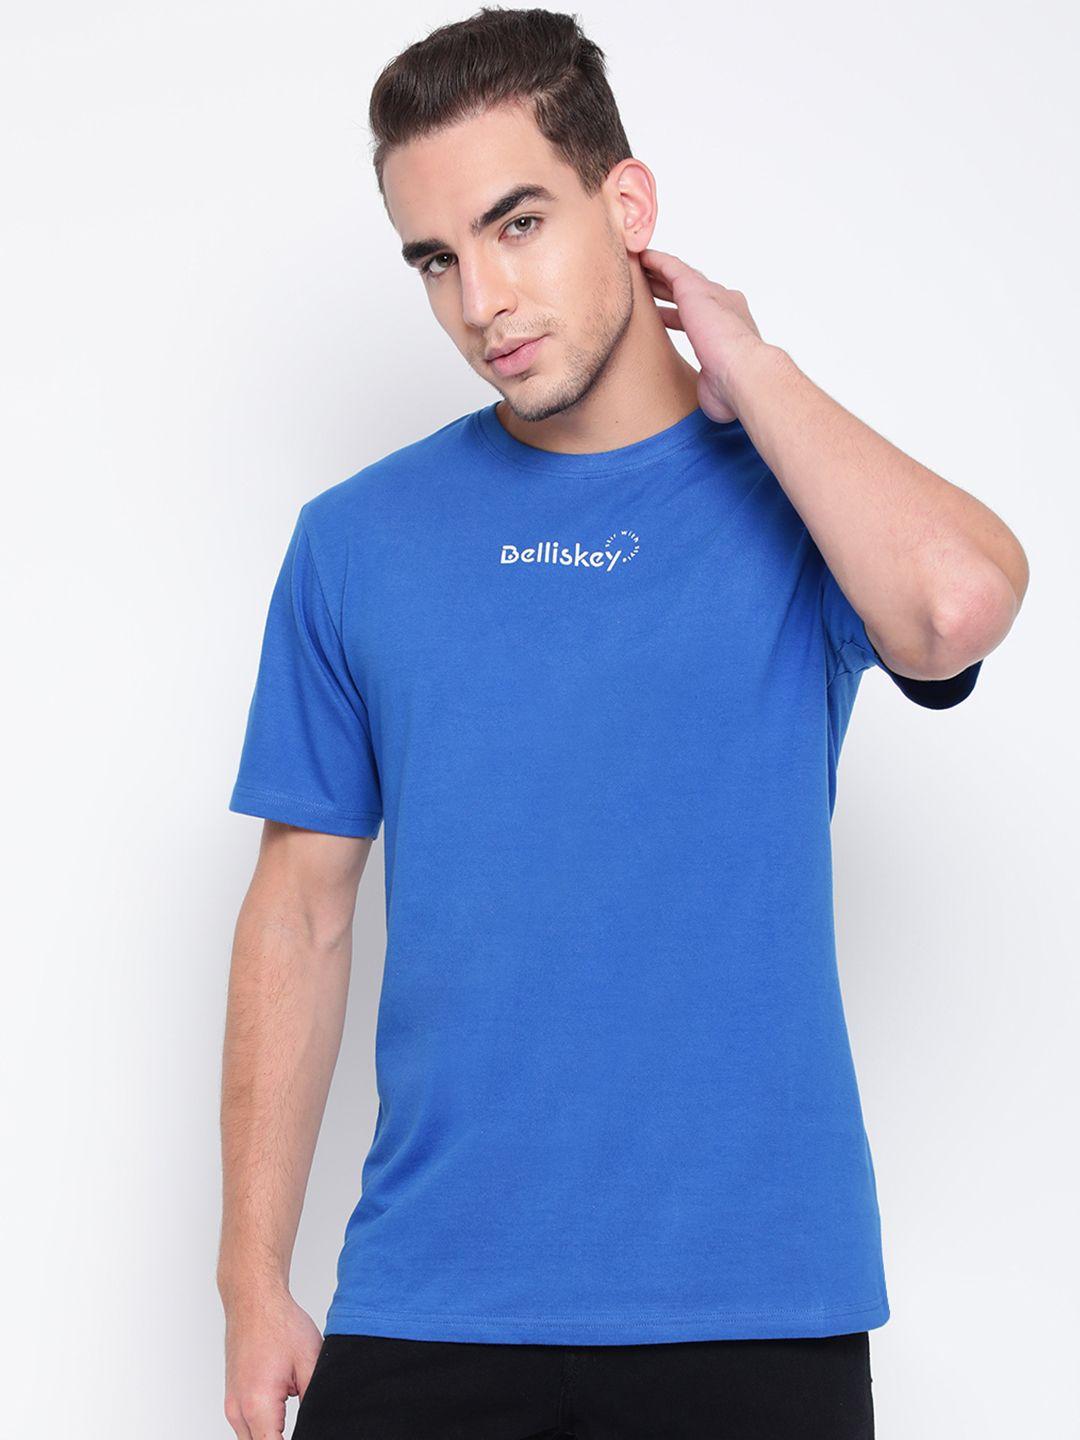 belliskey men blue & white typography printed t-shirt